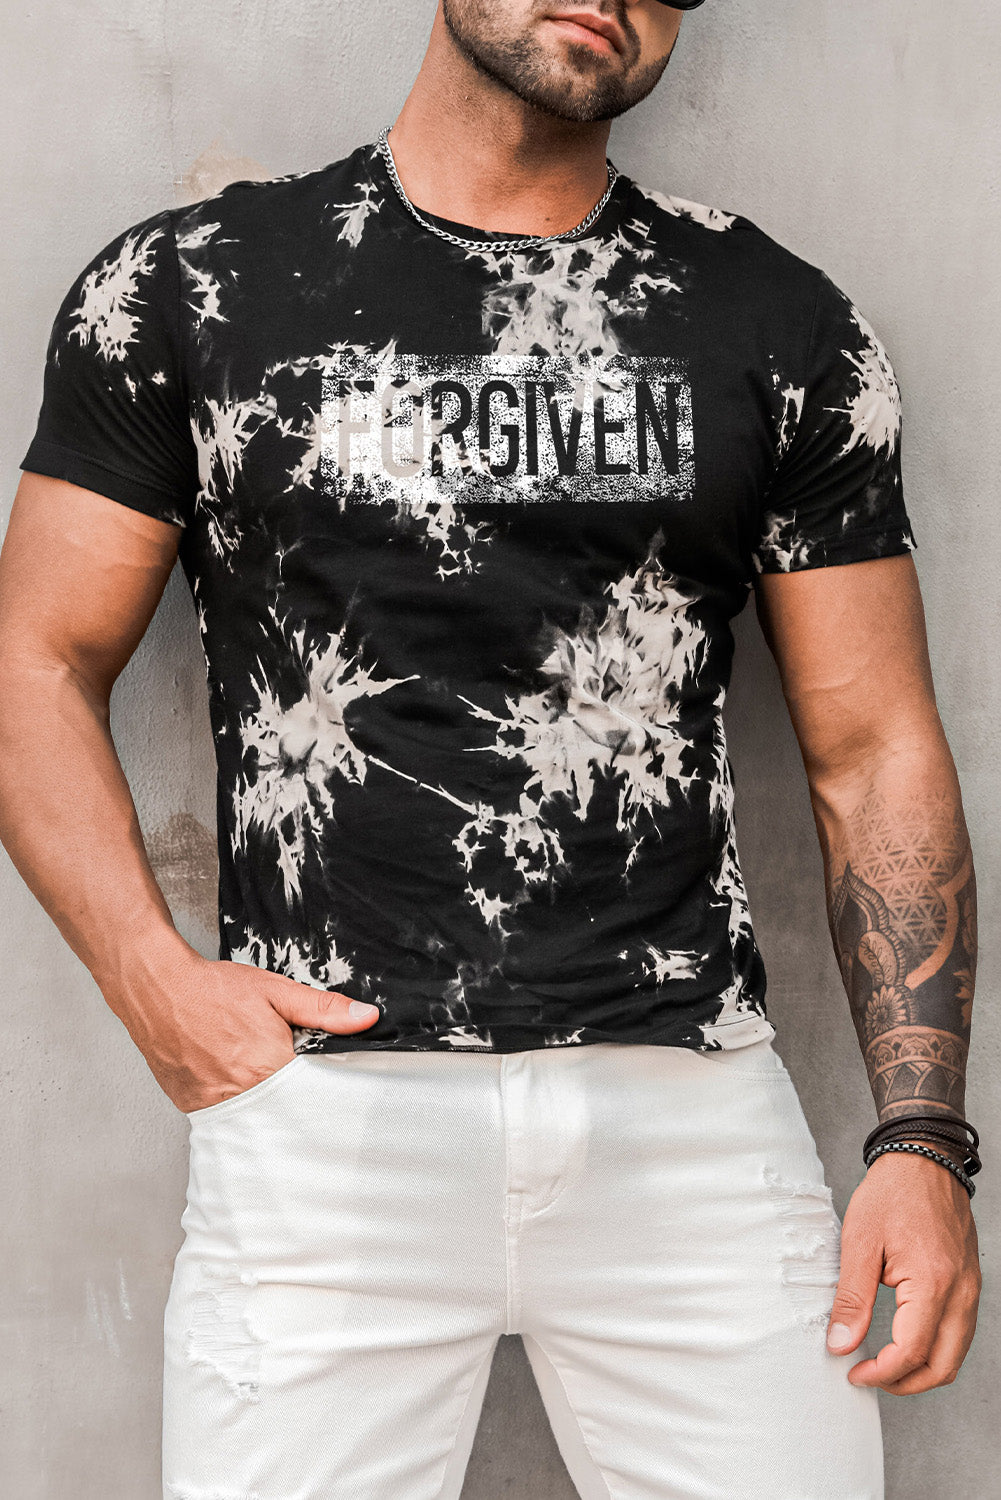 Black FORGIVEN Letter Tie Dye Print Short Sleeve Men's T-shirt Black 100%Cotton Men's Tops JT's Designer Fashion